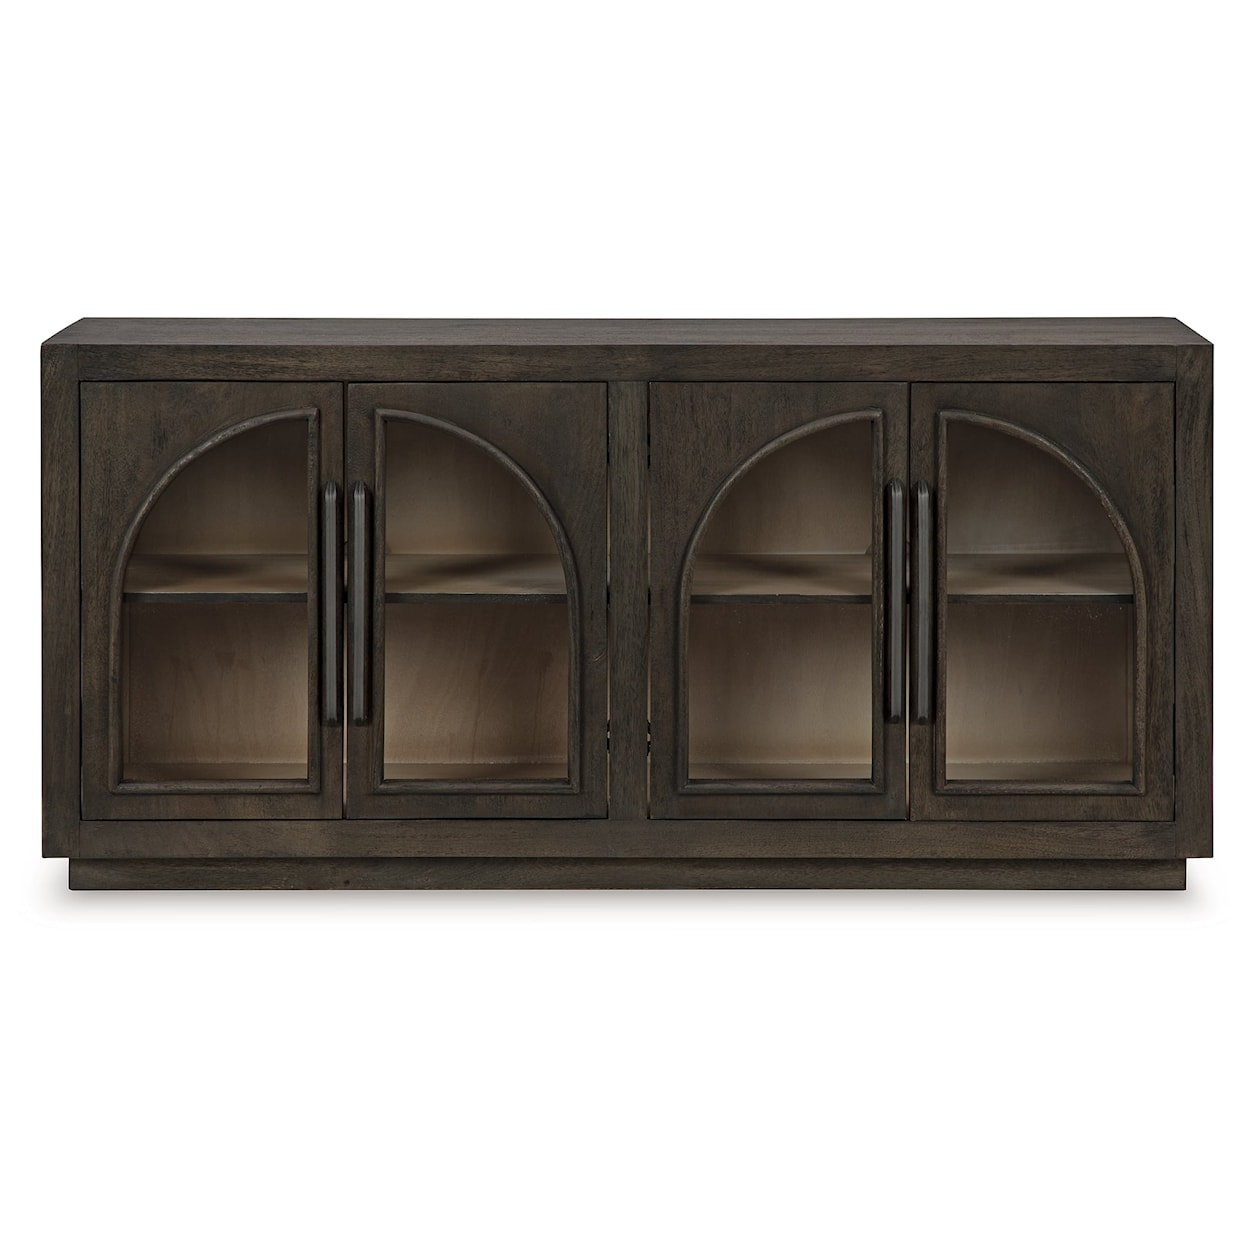 Ashley Furniture Signature Design Dreley Accent Cabinet